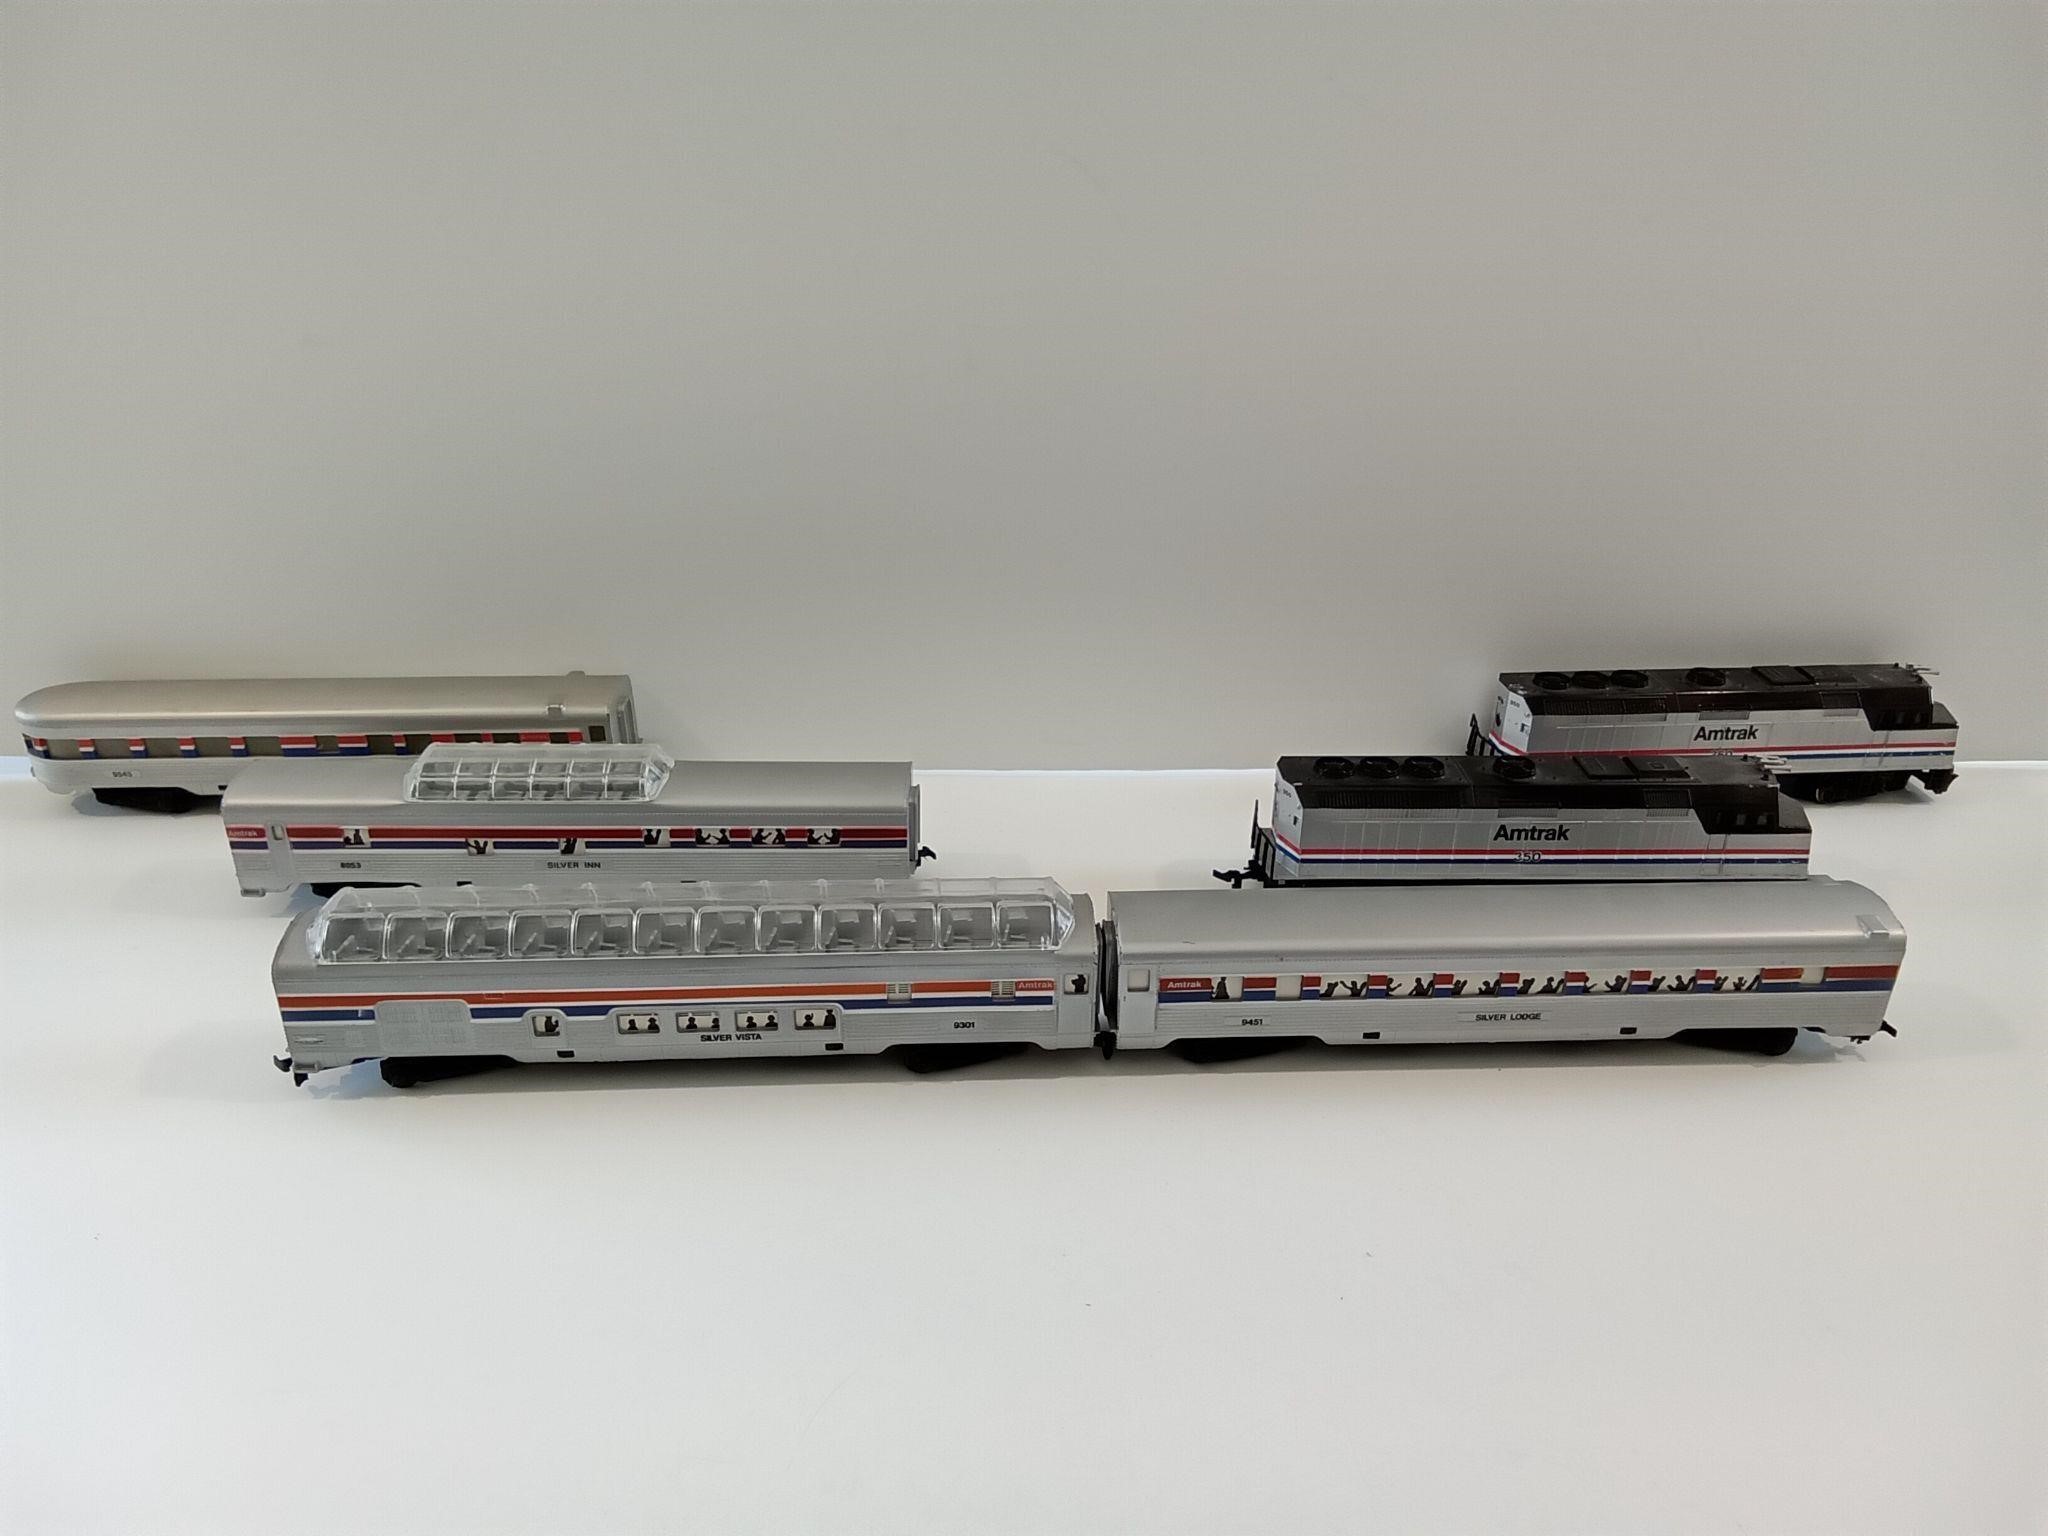 Amtrak Passenger Train with 2 Engines